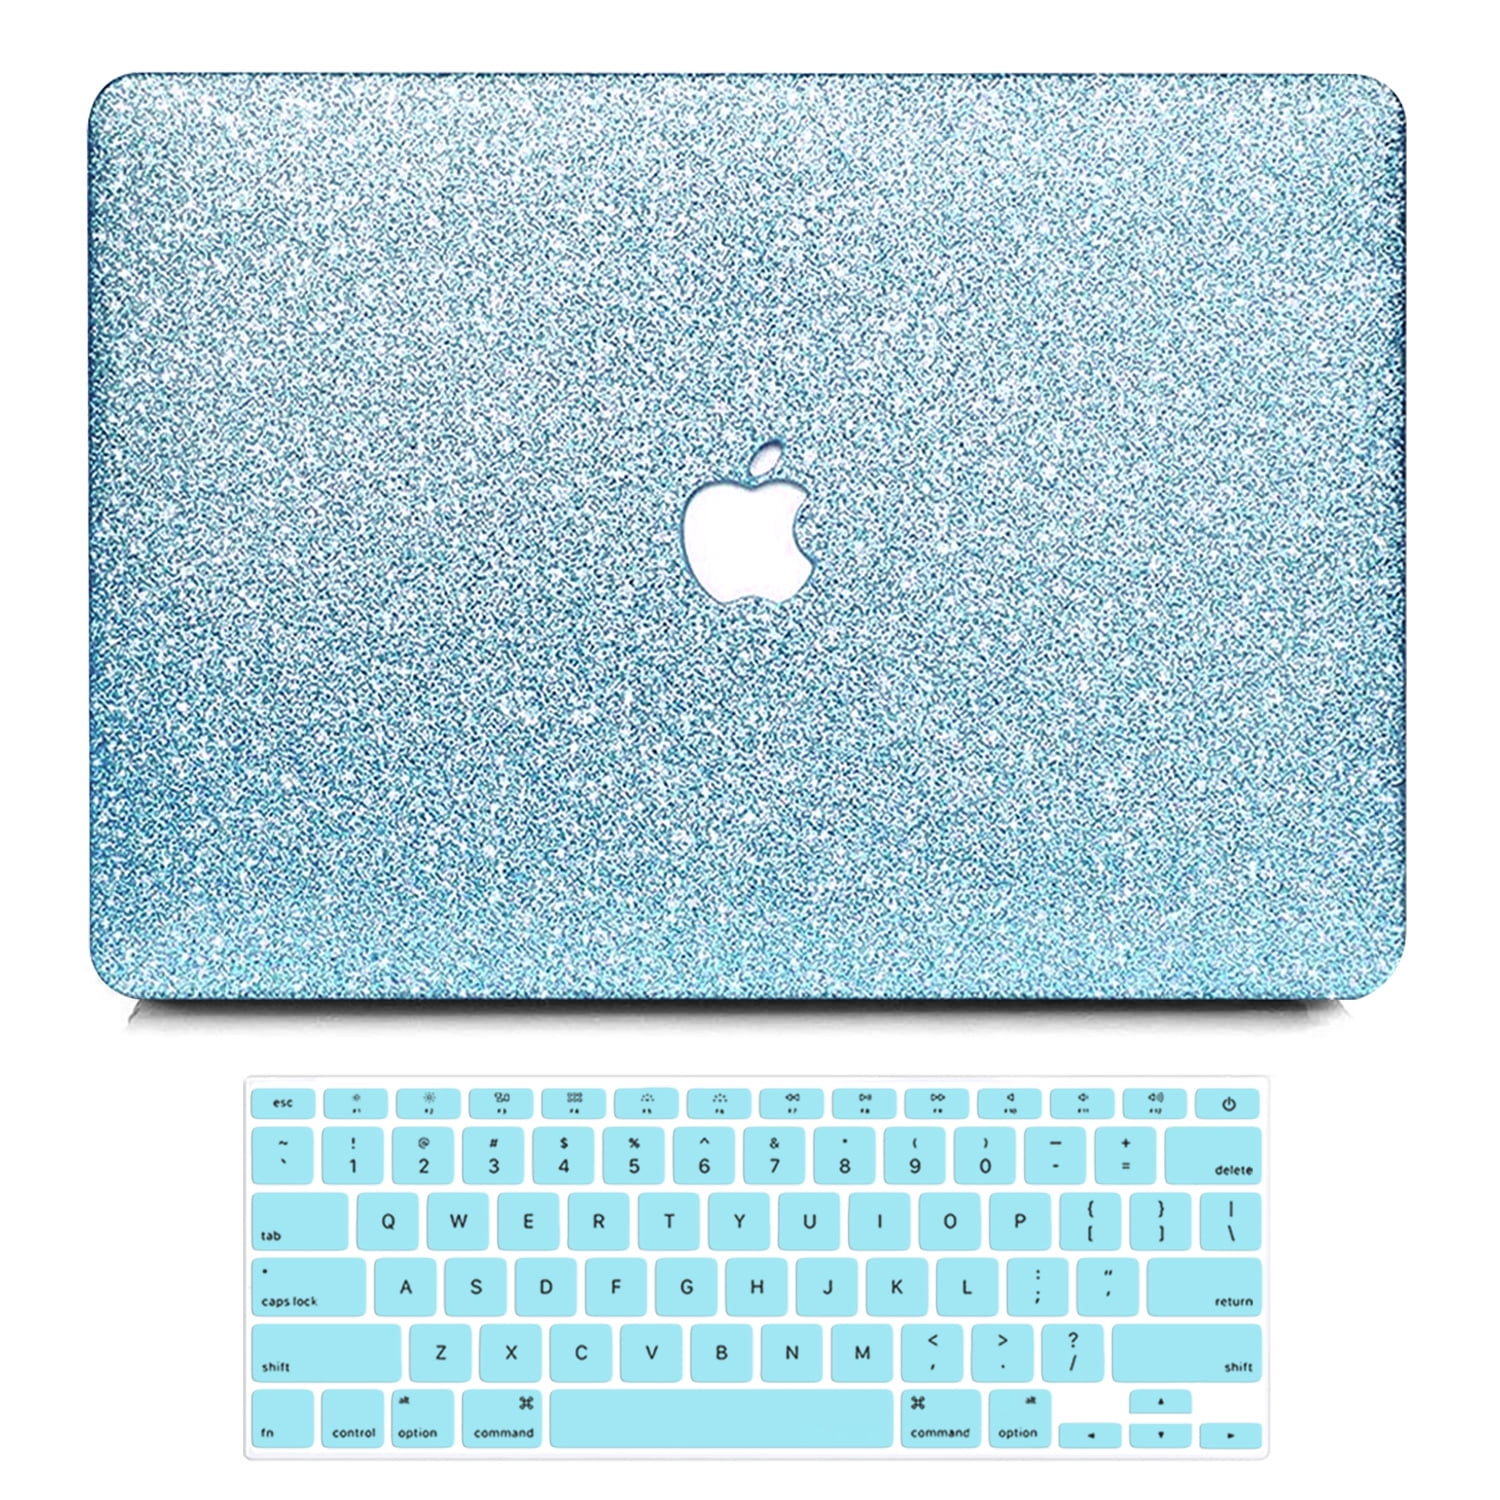 Rocket Star Moon Art MacBook Case Cover for Macbook Pro 13 16 15 inch Air 13 2020 Macbook Air 1113 Pro Retina Laptop Hard Case